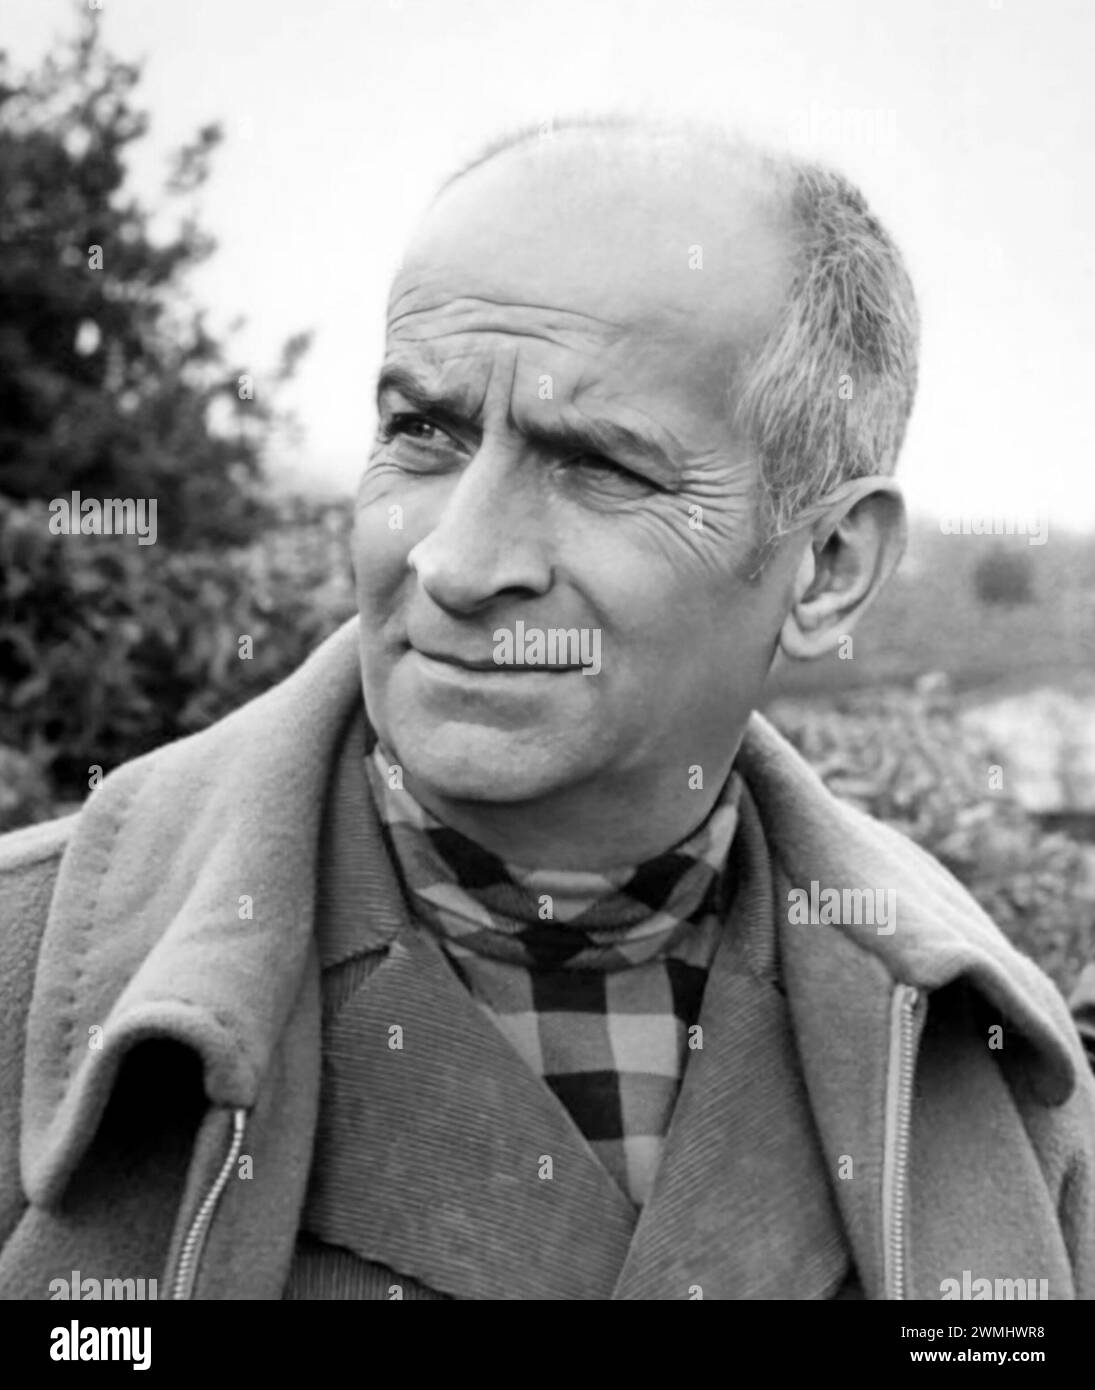 Louis de Funes. Ritratto dell'attore e comico francese Louis Germain David de Funès de Galarza (1914-1983) nel 1970 Foto Stock